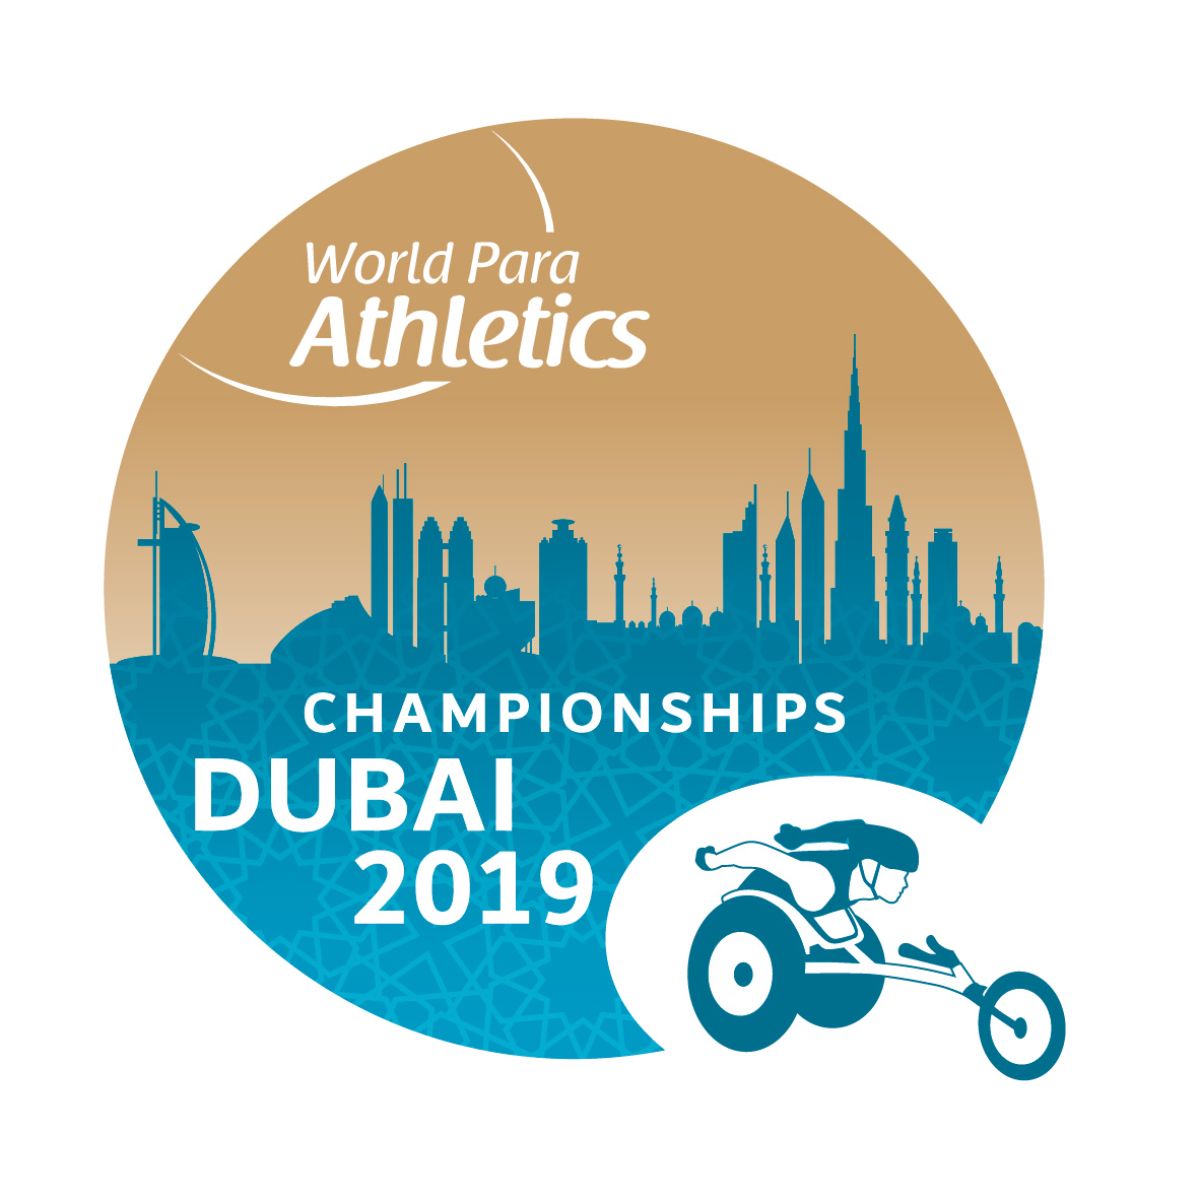 the official logo of the Dubai 2019 World Para Athletics Championships